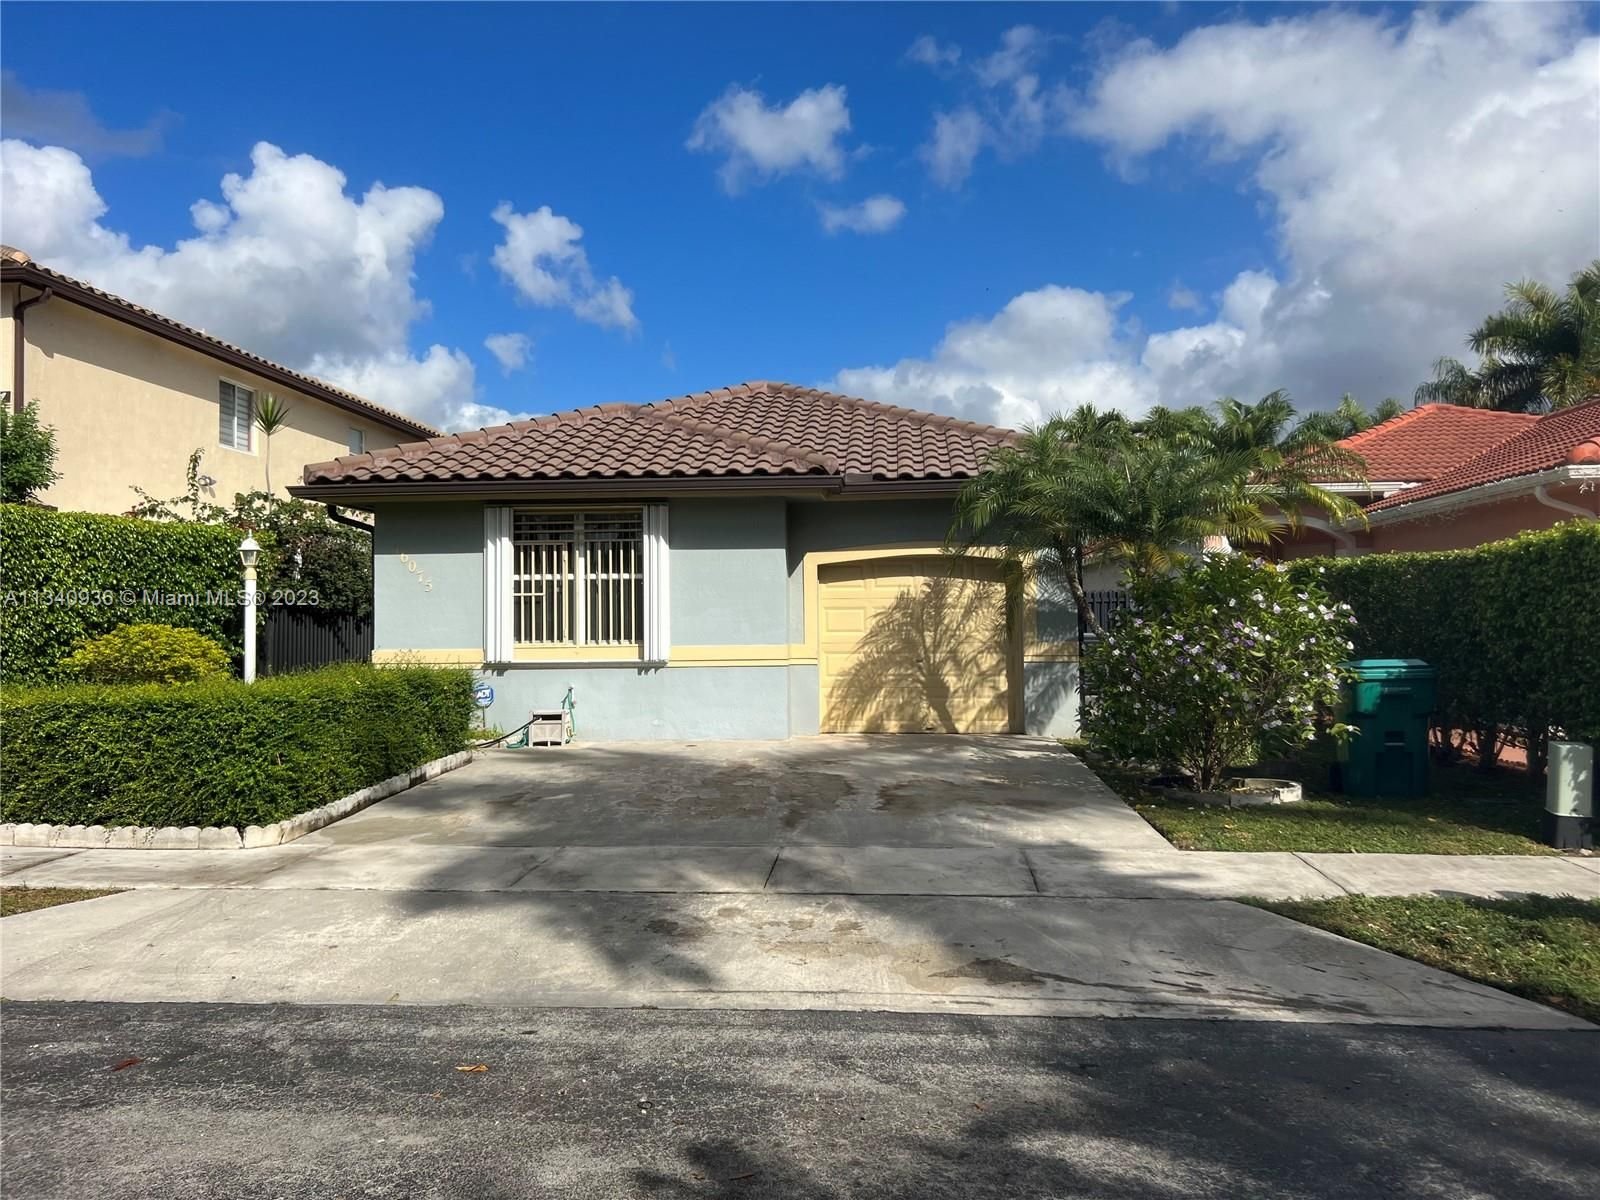 Real estate property located at 16075 69 Ter, Miami-Dade County, Miami, FL